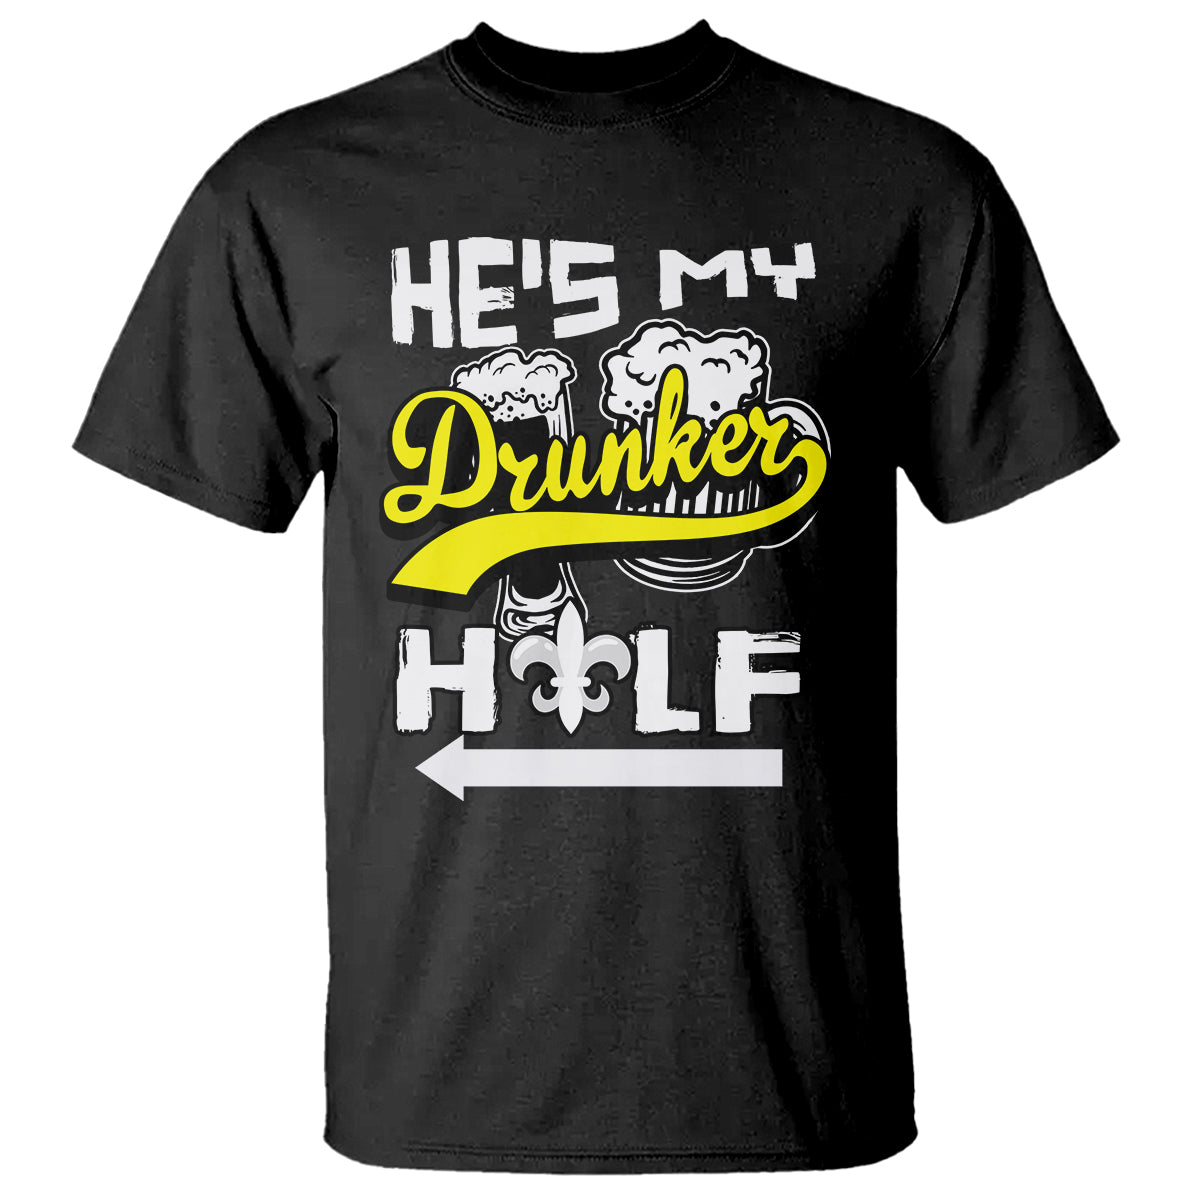 Mardi Gras T Shirt He's My Drunker Half Matching Couple TS09